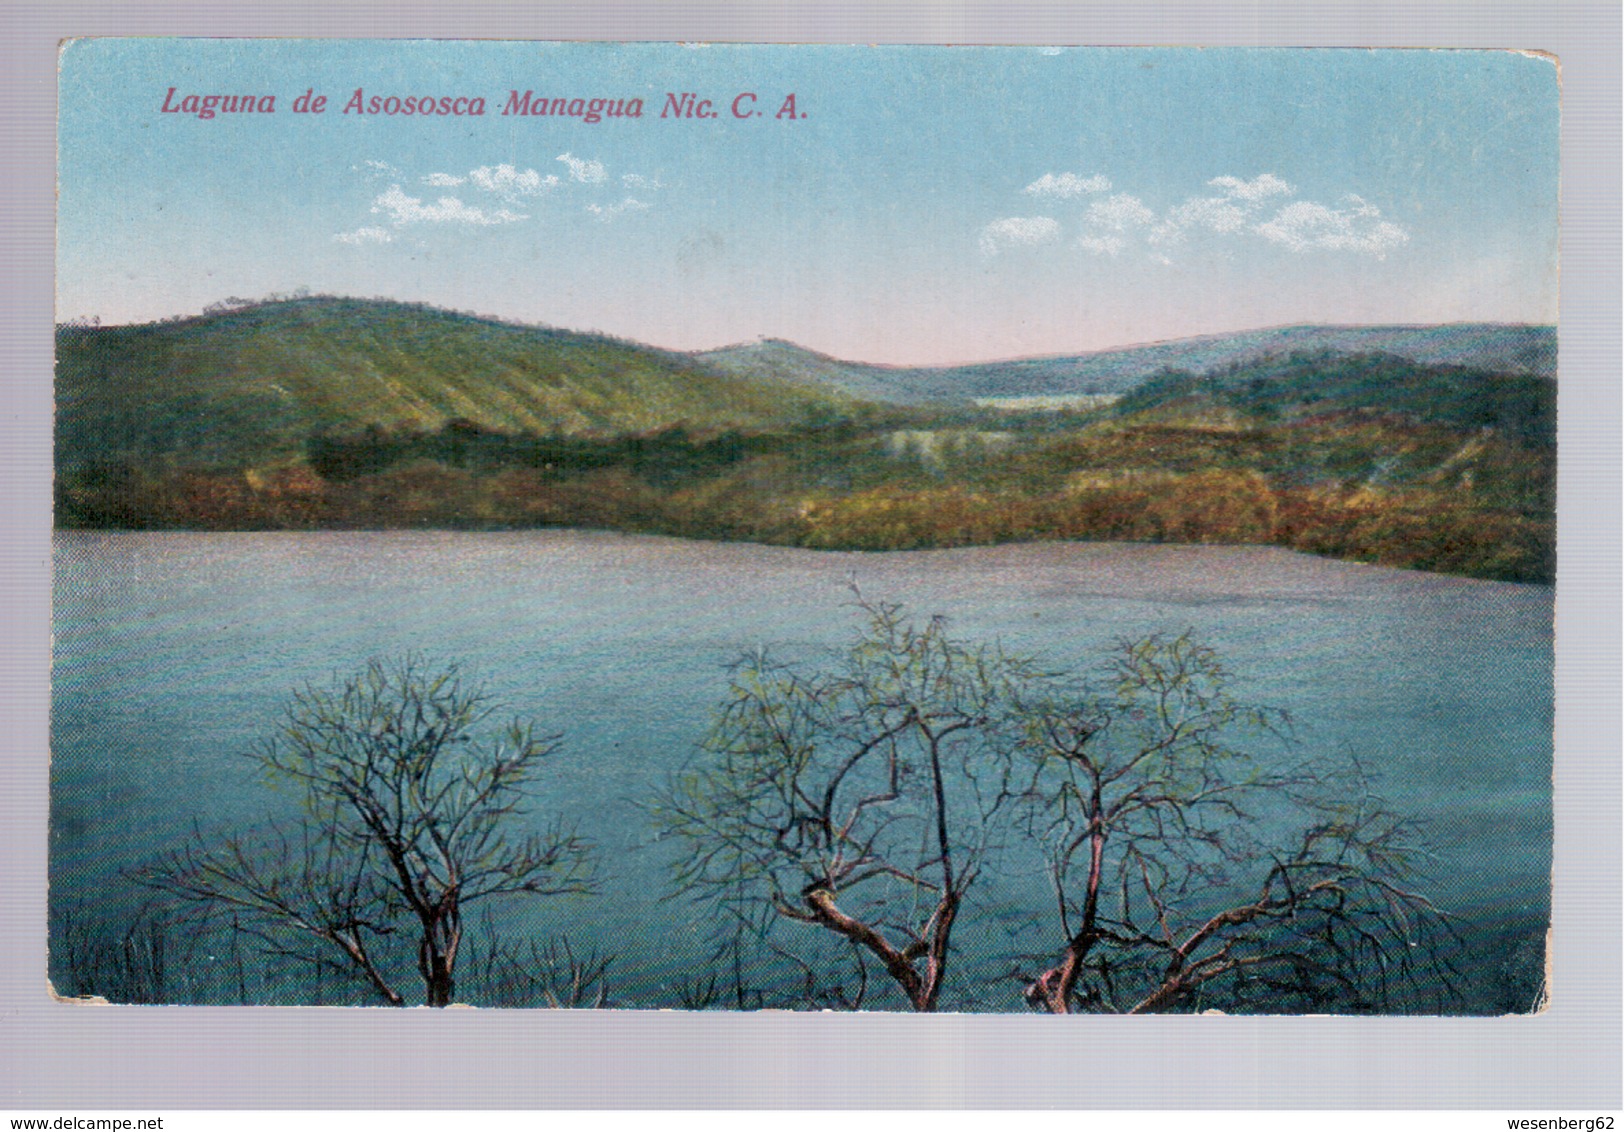 Nicaragua Laguna De Asososca Managua Nic. C.A. Ca 1930 Old Postcard - Nicaragua